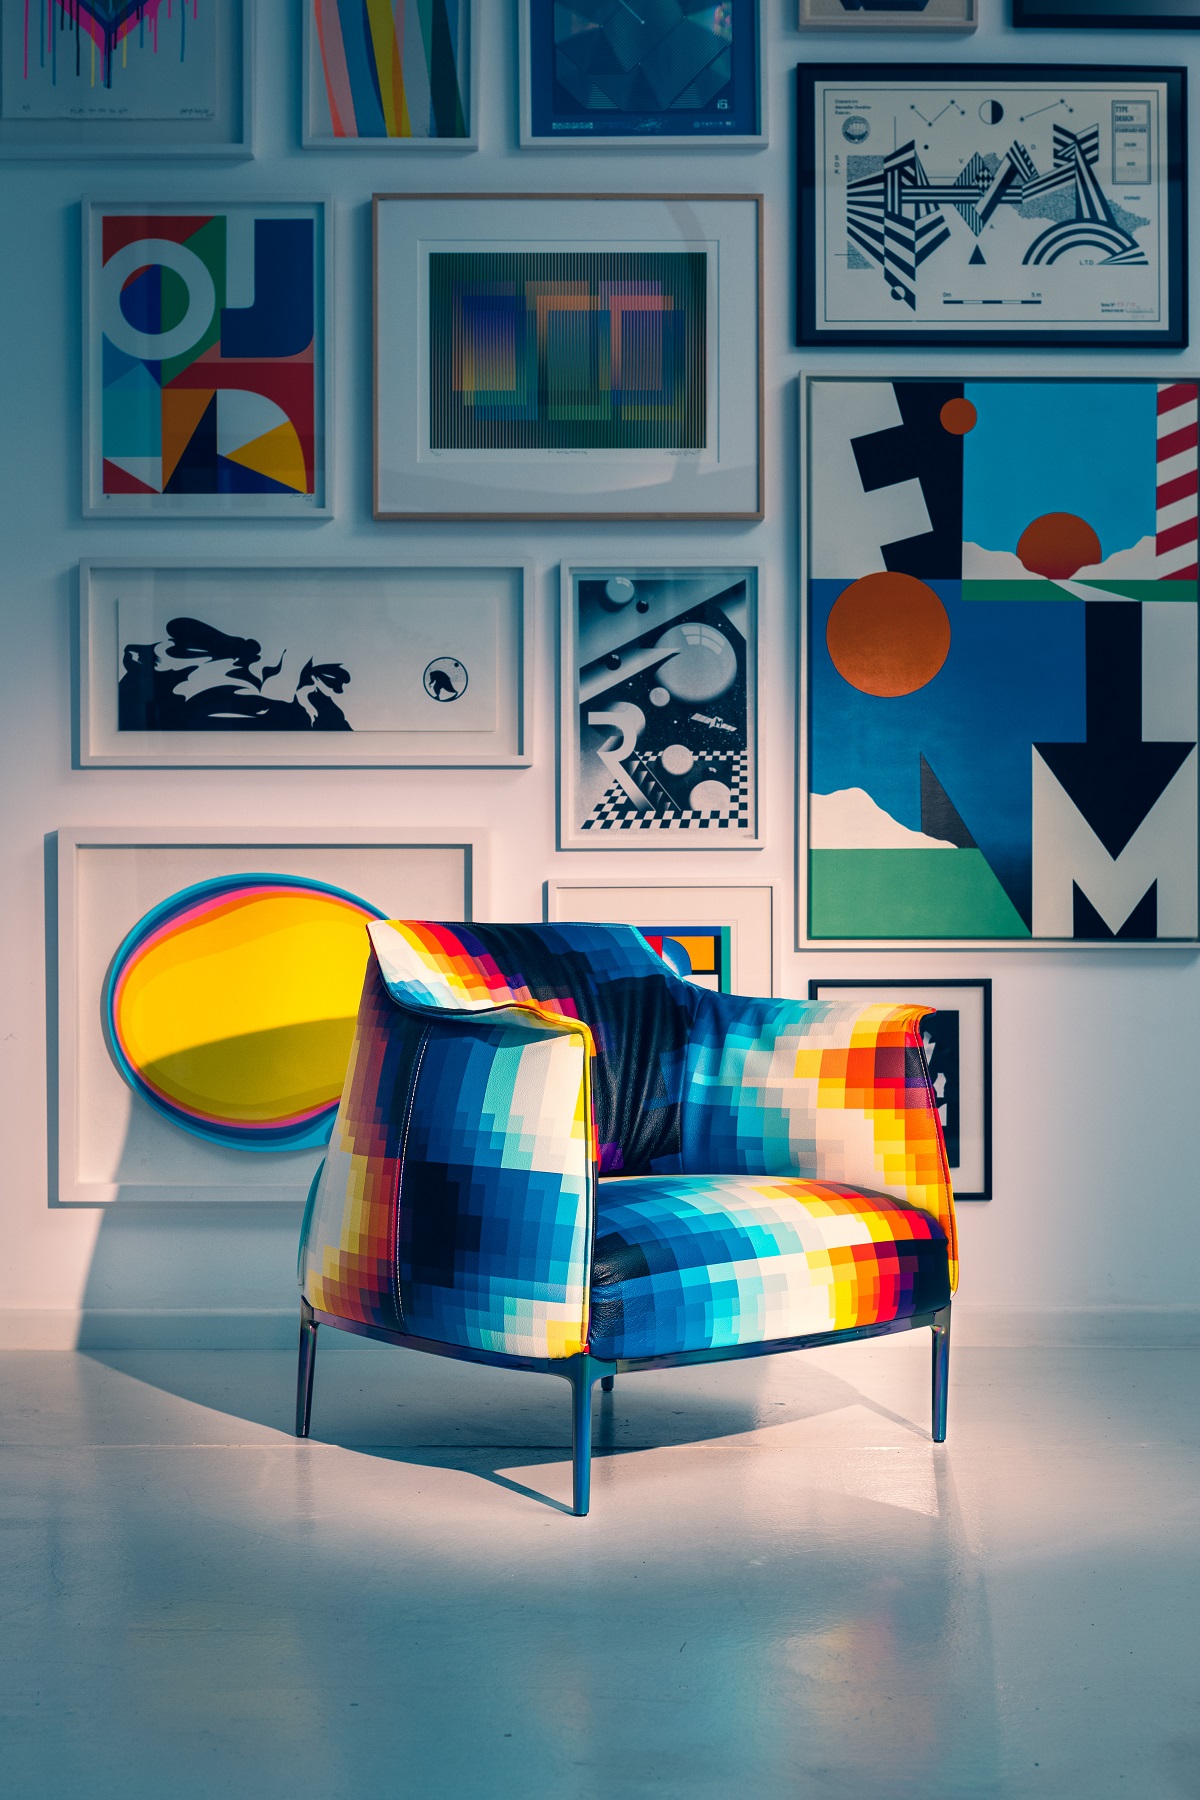 colourful digital imagery painted onto the Poltrona Frau Archibald chair